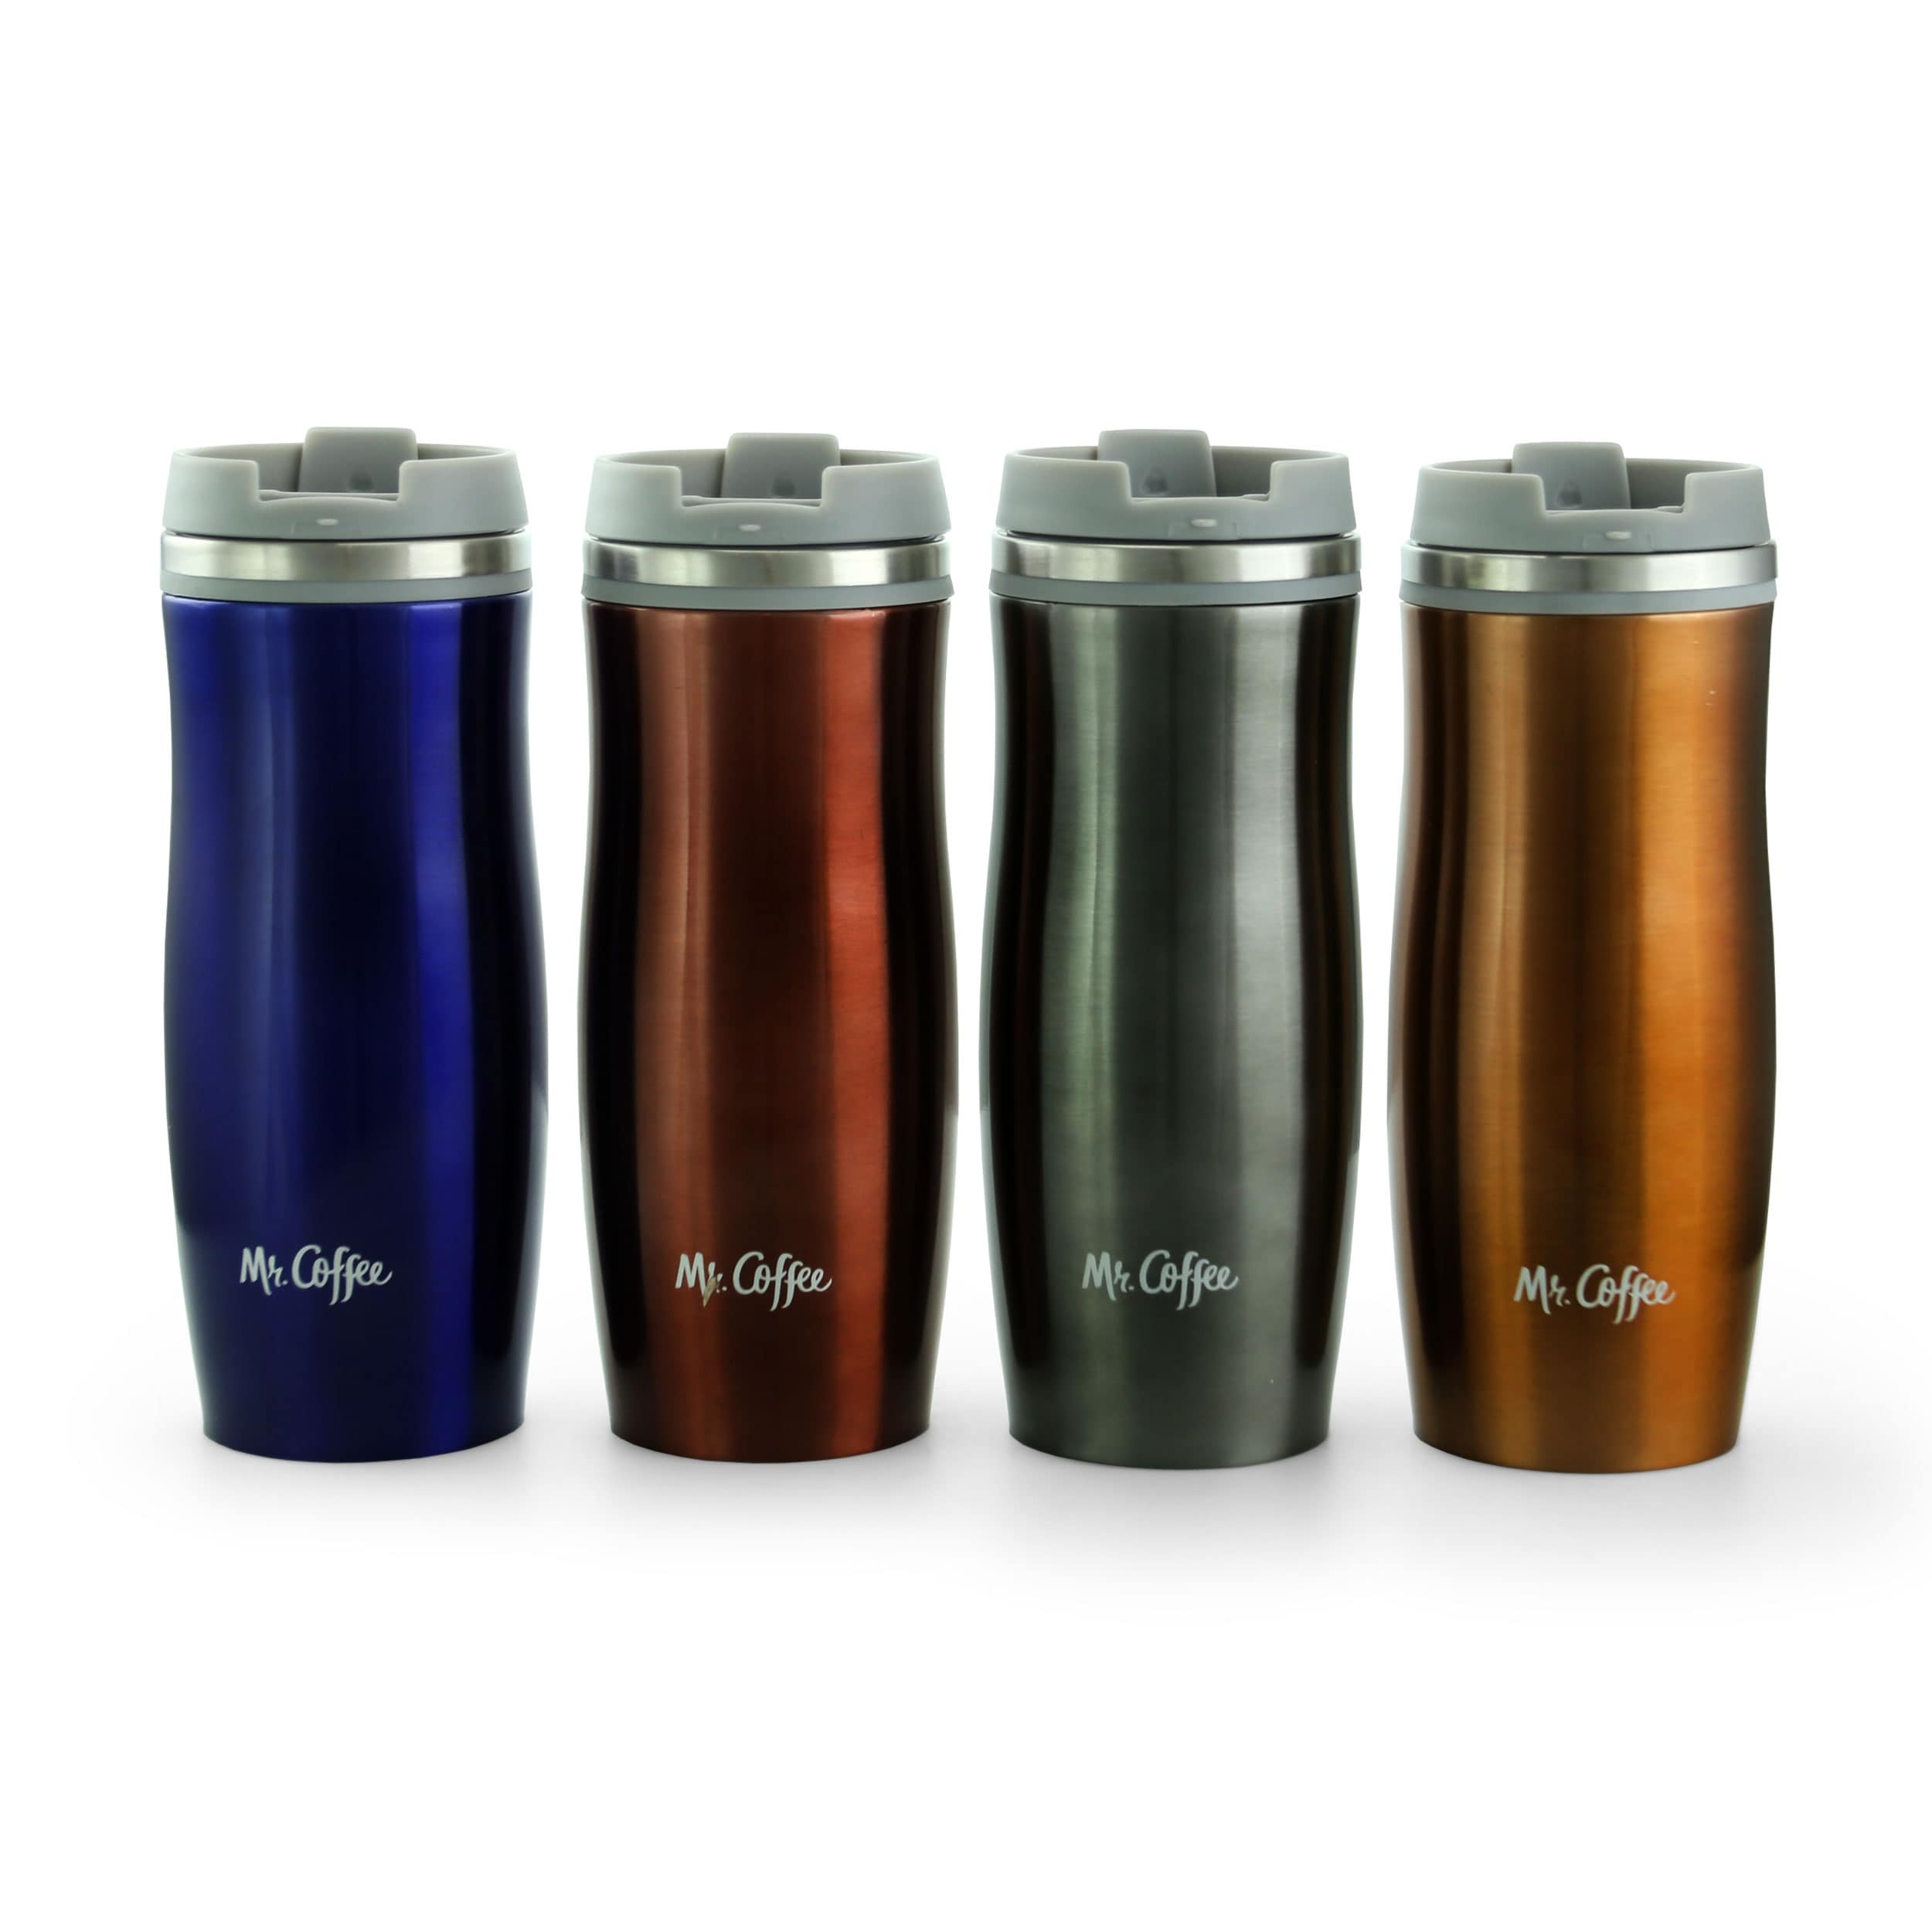 Hydro Flask Mug - Stainless Steel Reusable Tea Coffee Travel 24 oz, Cobalt